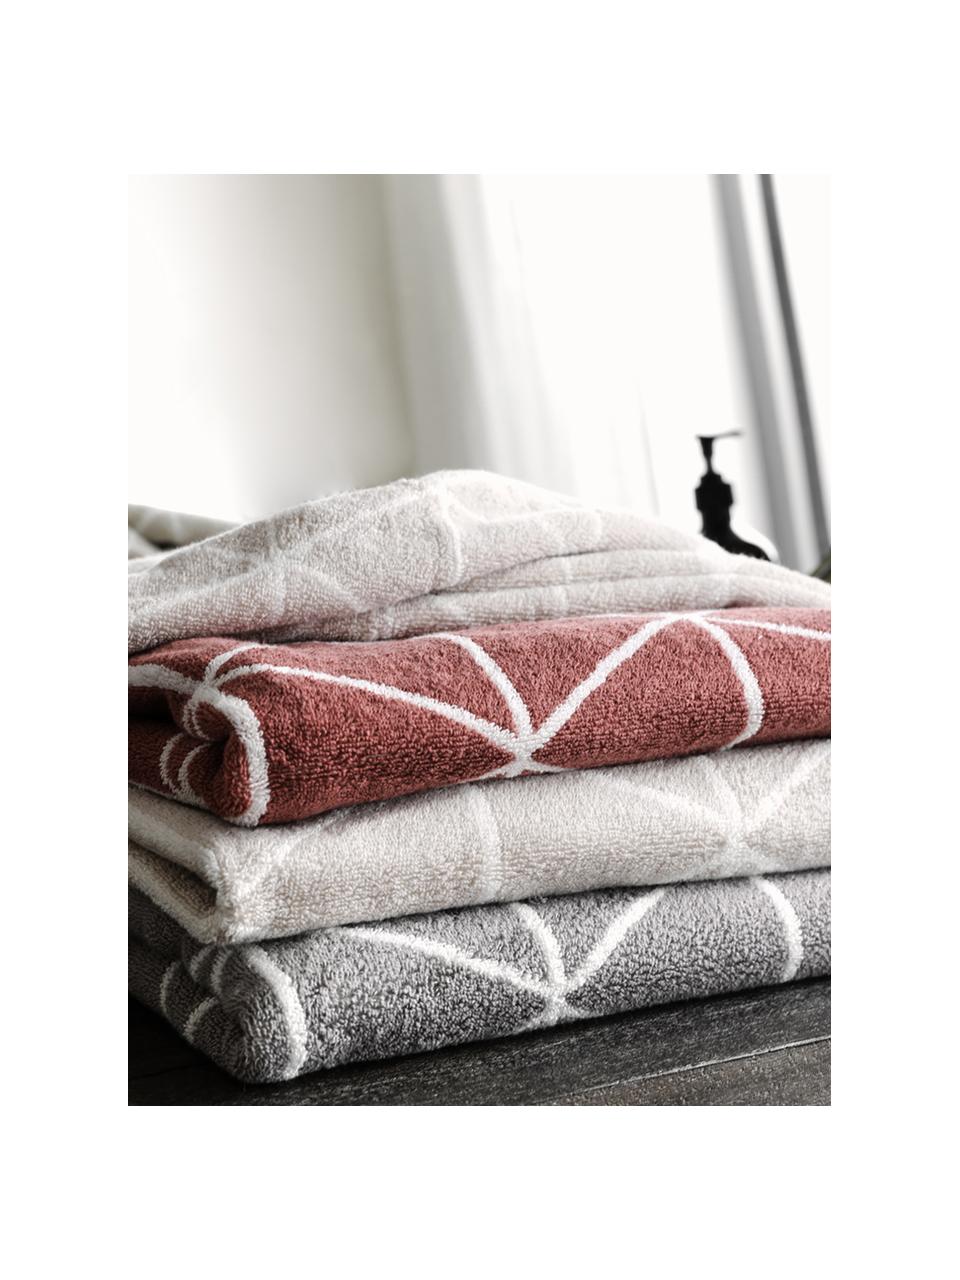 Set de toallas Elina, 3 pzas., caras distintas, Terracota, blanco crema, Set de diferentes tamaños